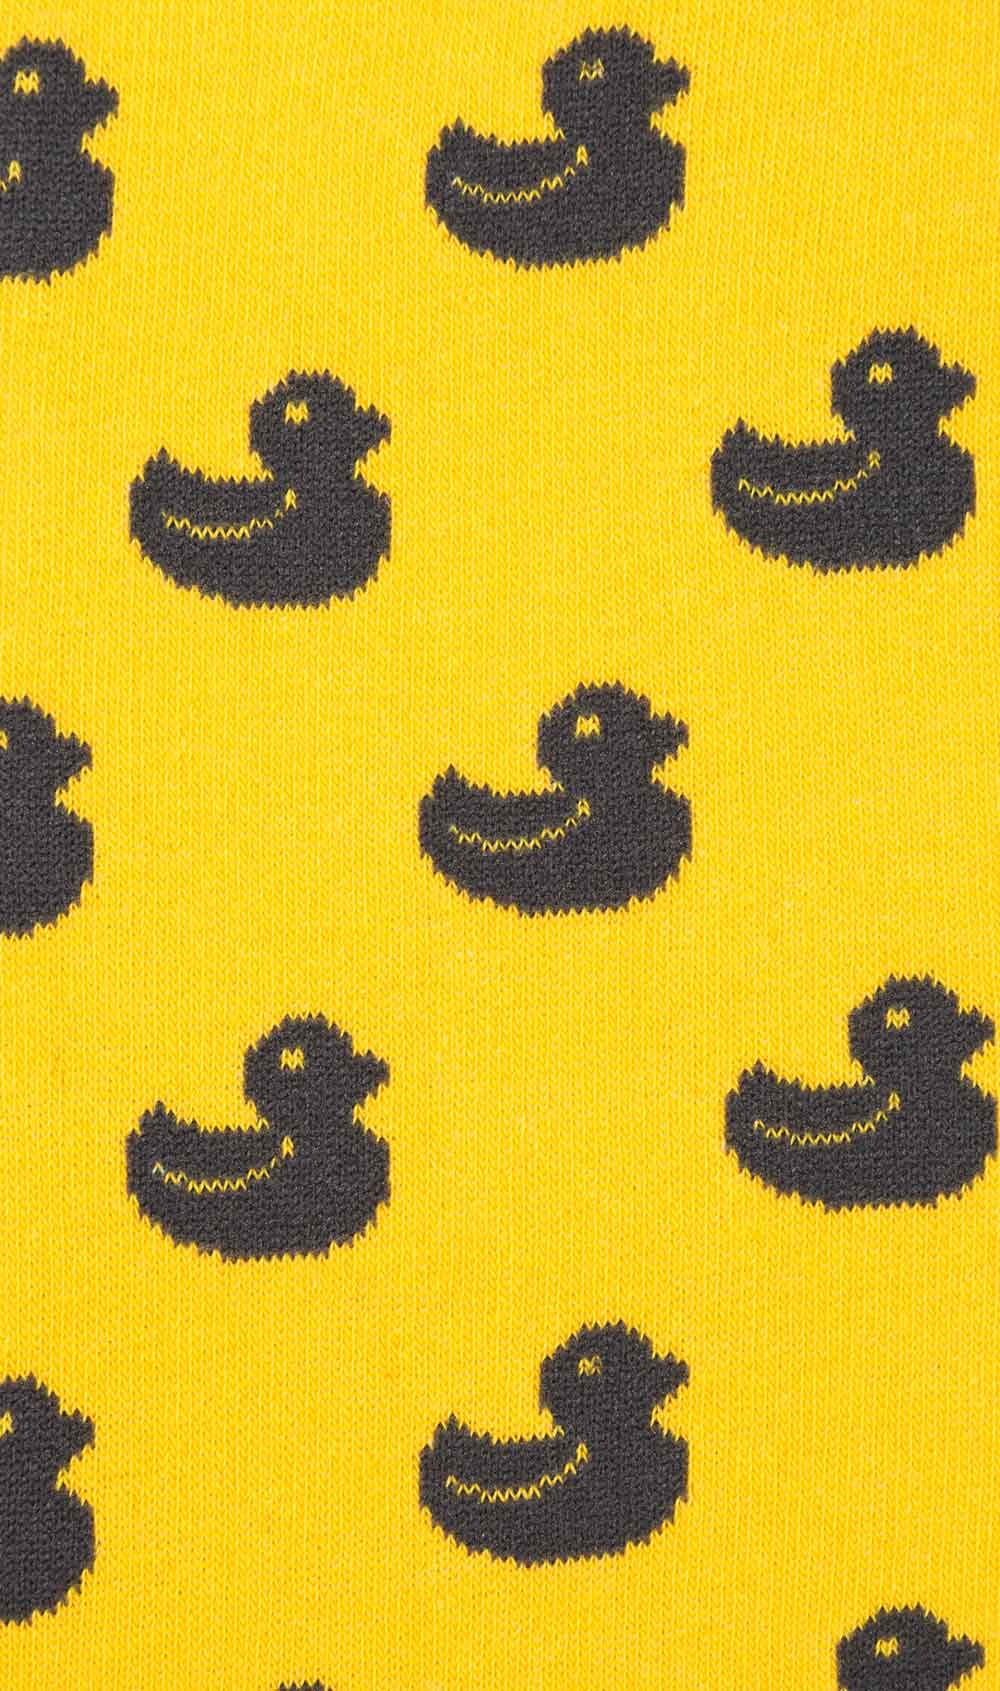 Ugly Ducklings Yellow Socks Fabric